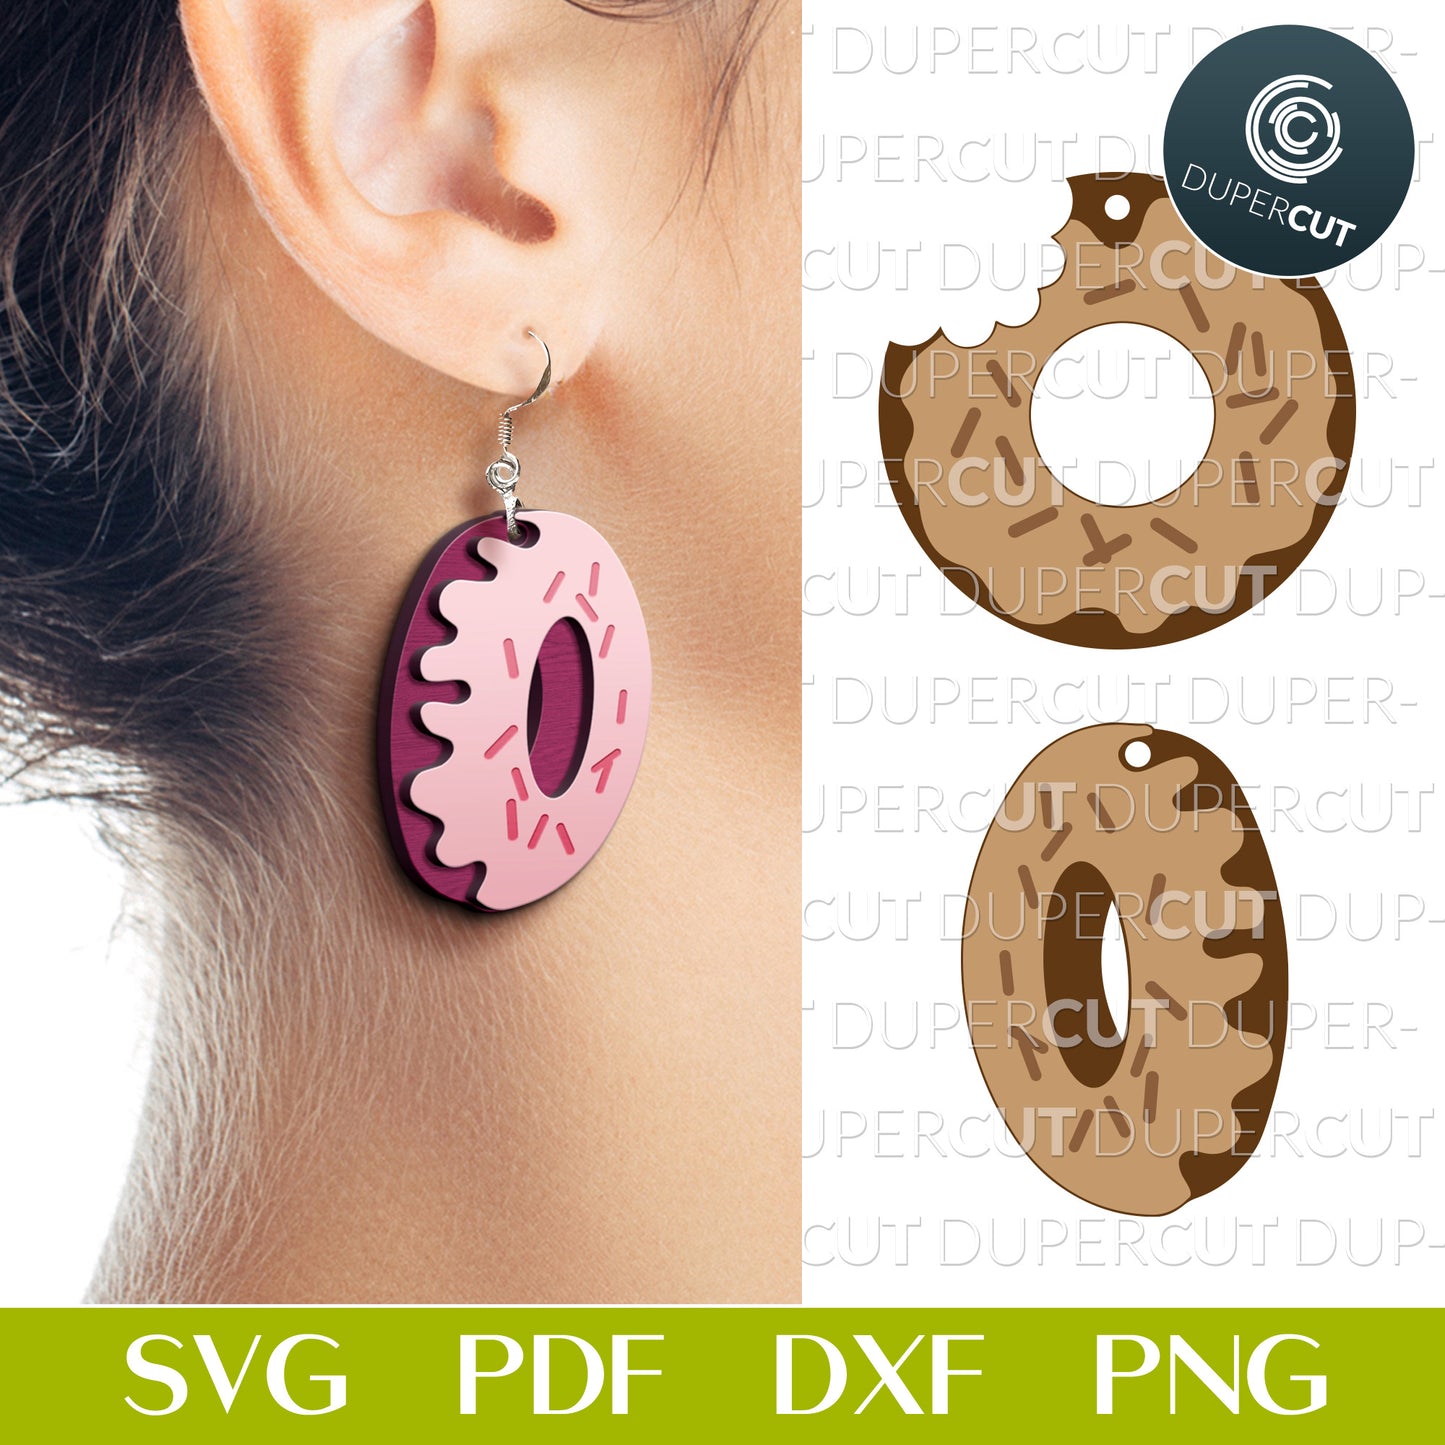 Side Donut earrings - SVG DXF laser cutting files template pattern for Glowforge, Cricut, Silhouette, CNC plasma machines by www.DuperCut.com